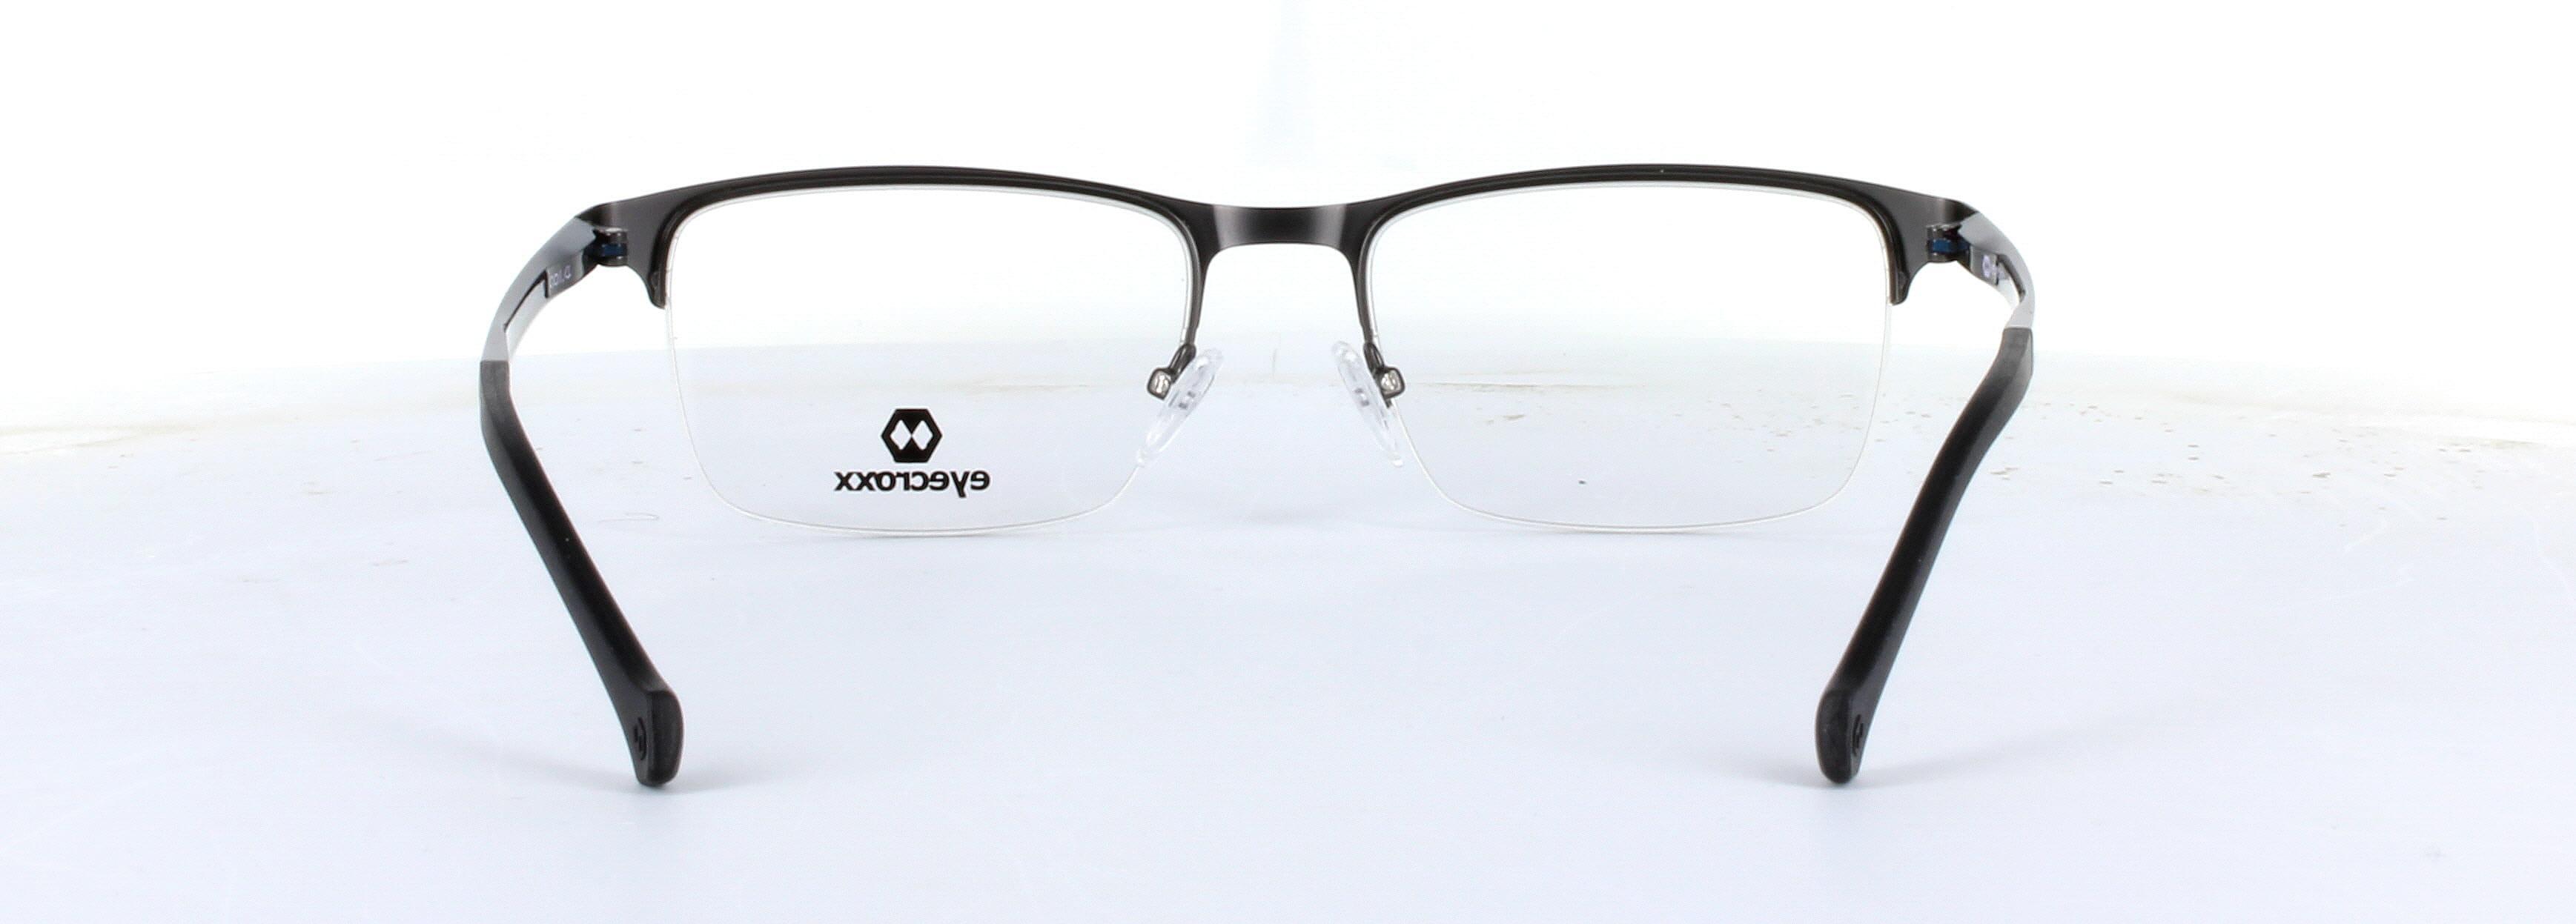 Eyecroxx 555-C4 Gunmetal Semi Rimless Metal Glasses - Image View 5